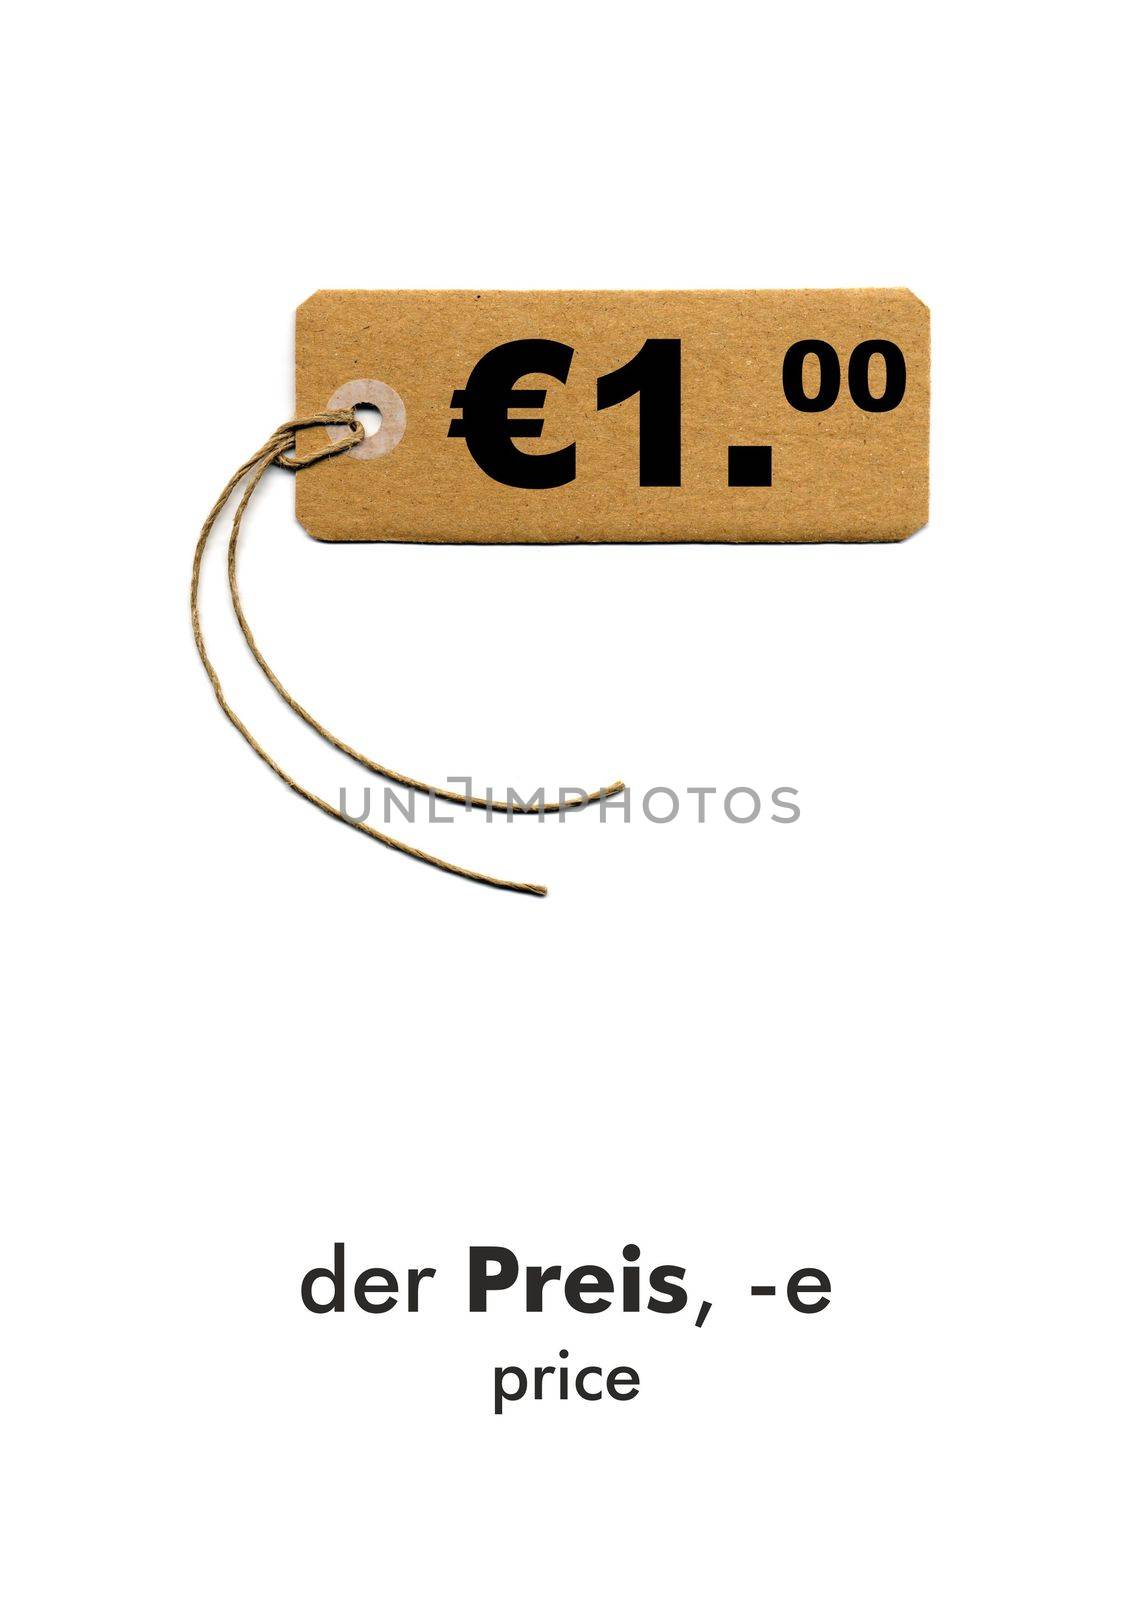 German word card: der Preis (price)